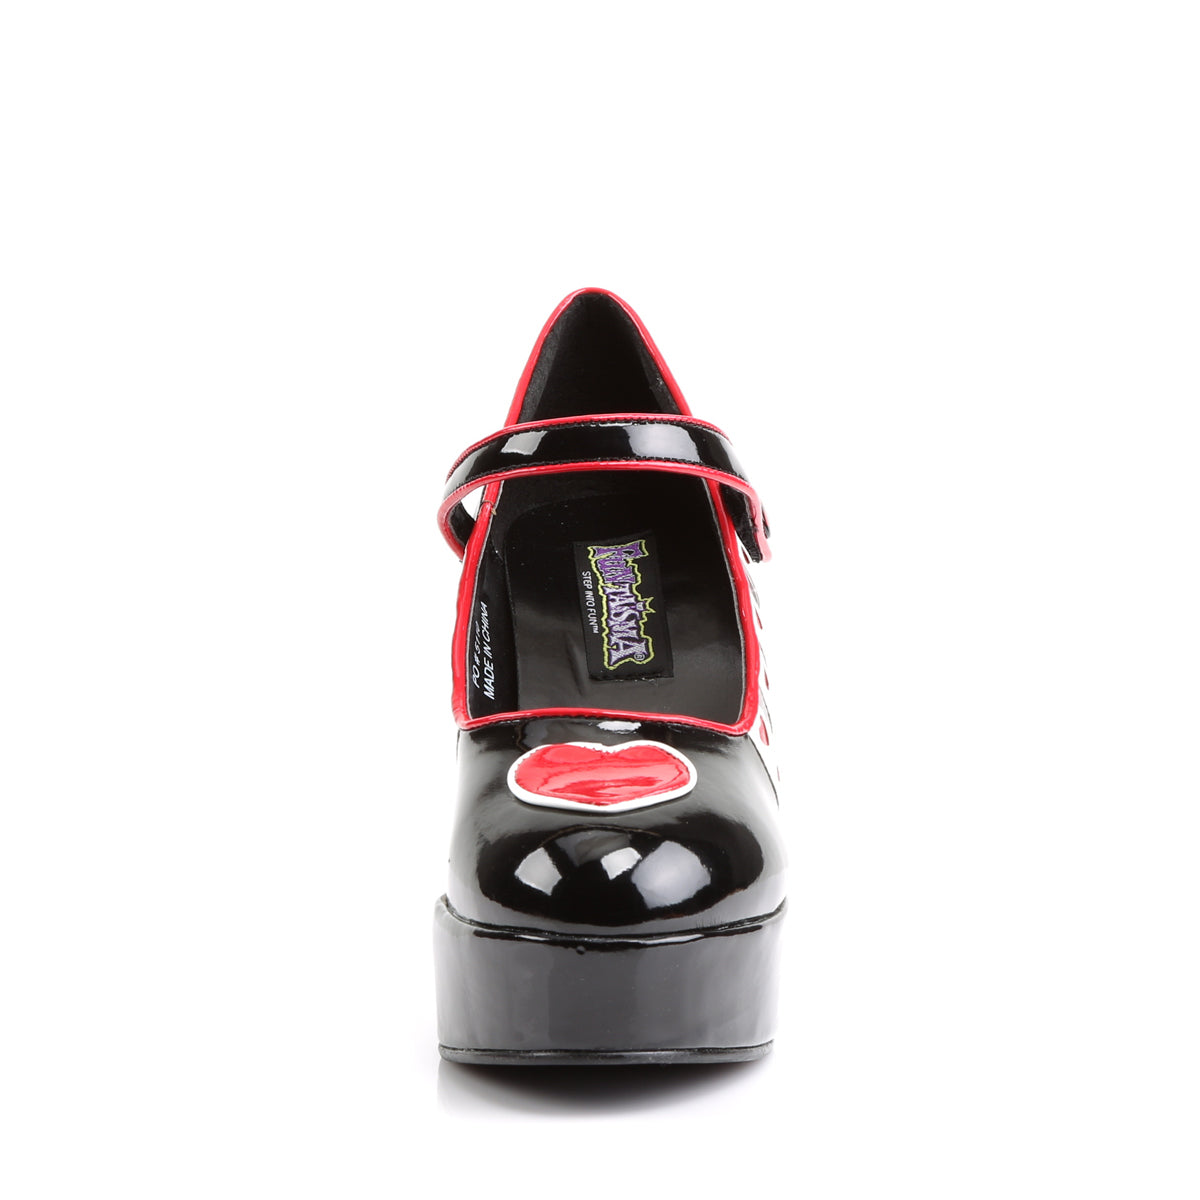 QUEEN-55 Funtasma 4" Heel Black-White-Red Women's Costume Shoes Funtasma Costume Shoes Alternative Footwear